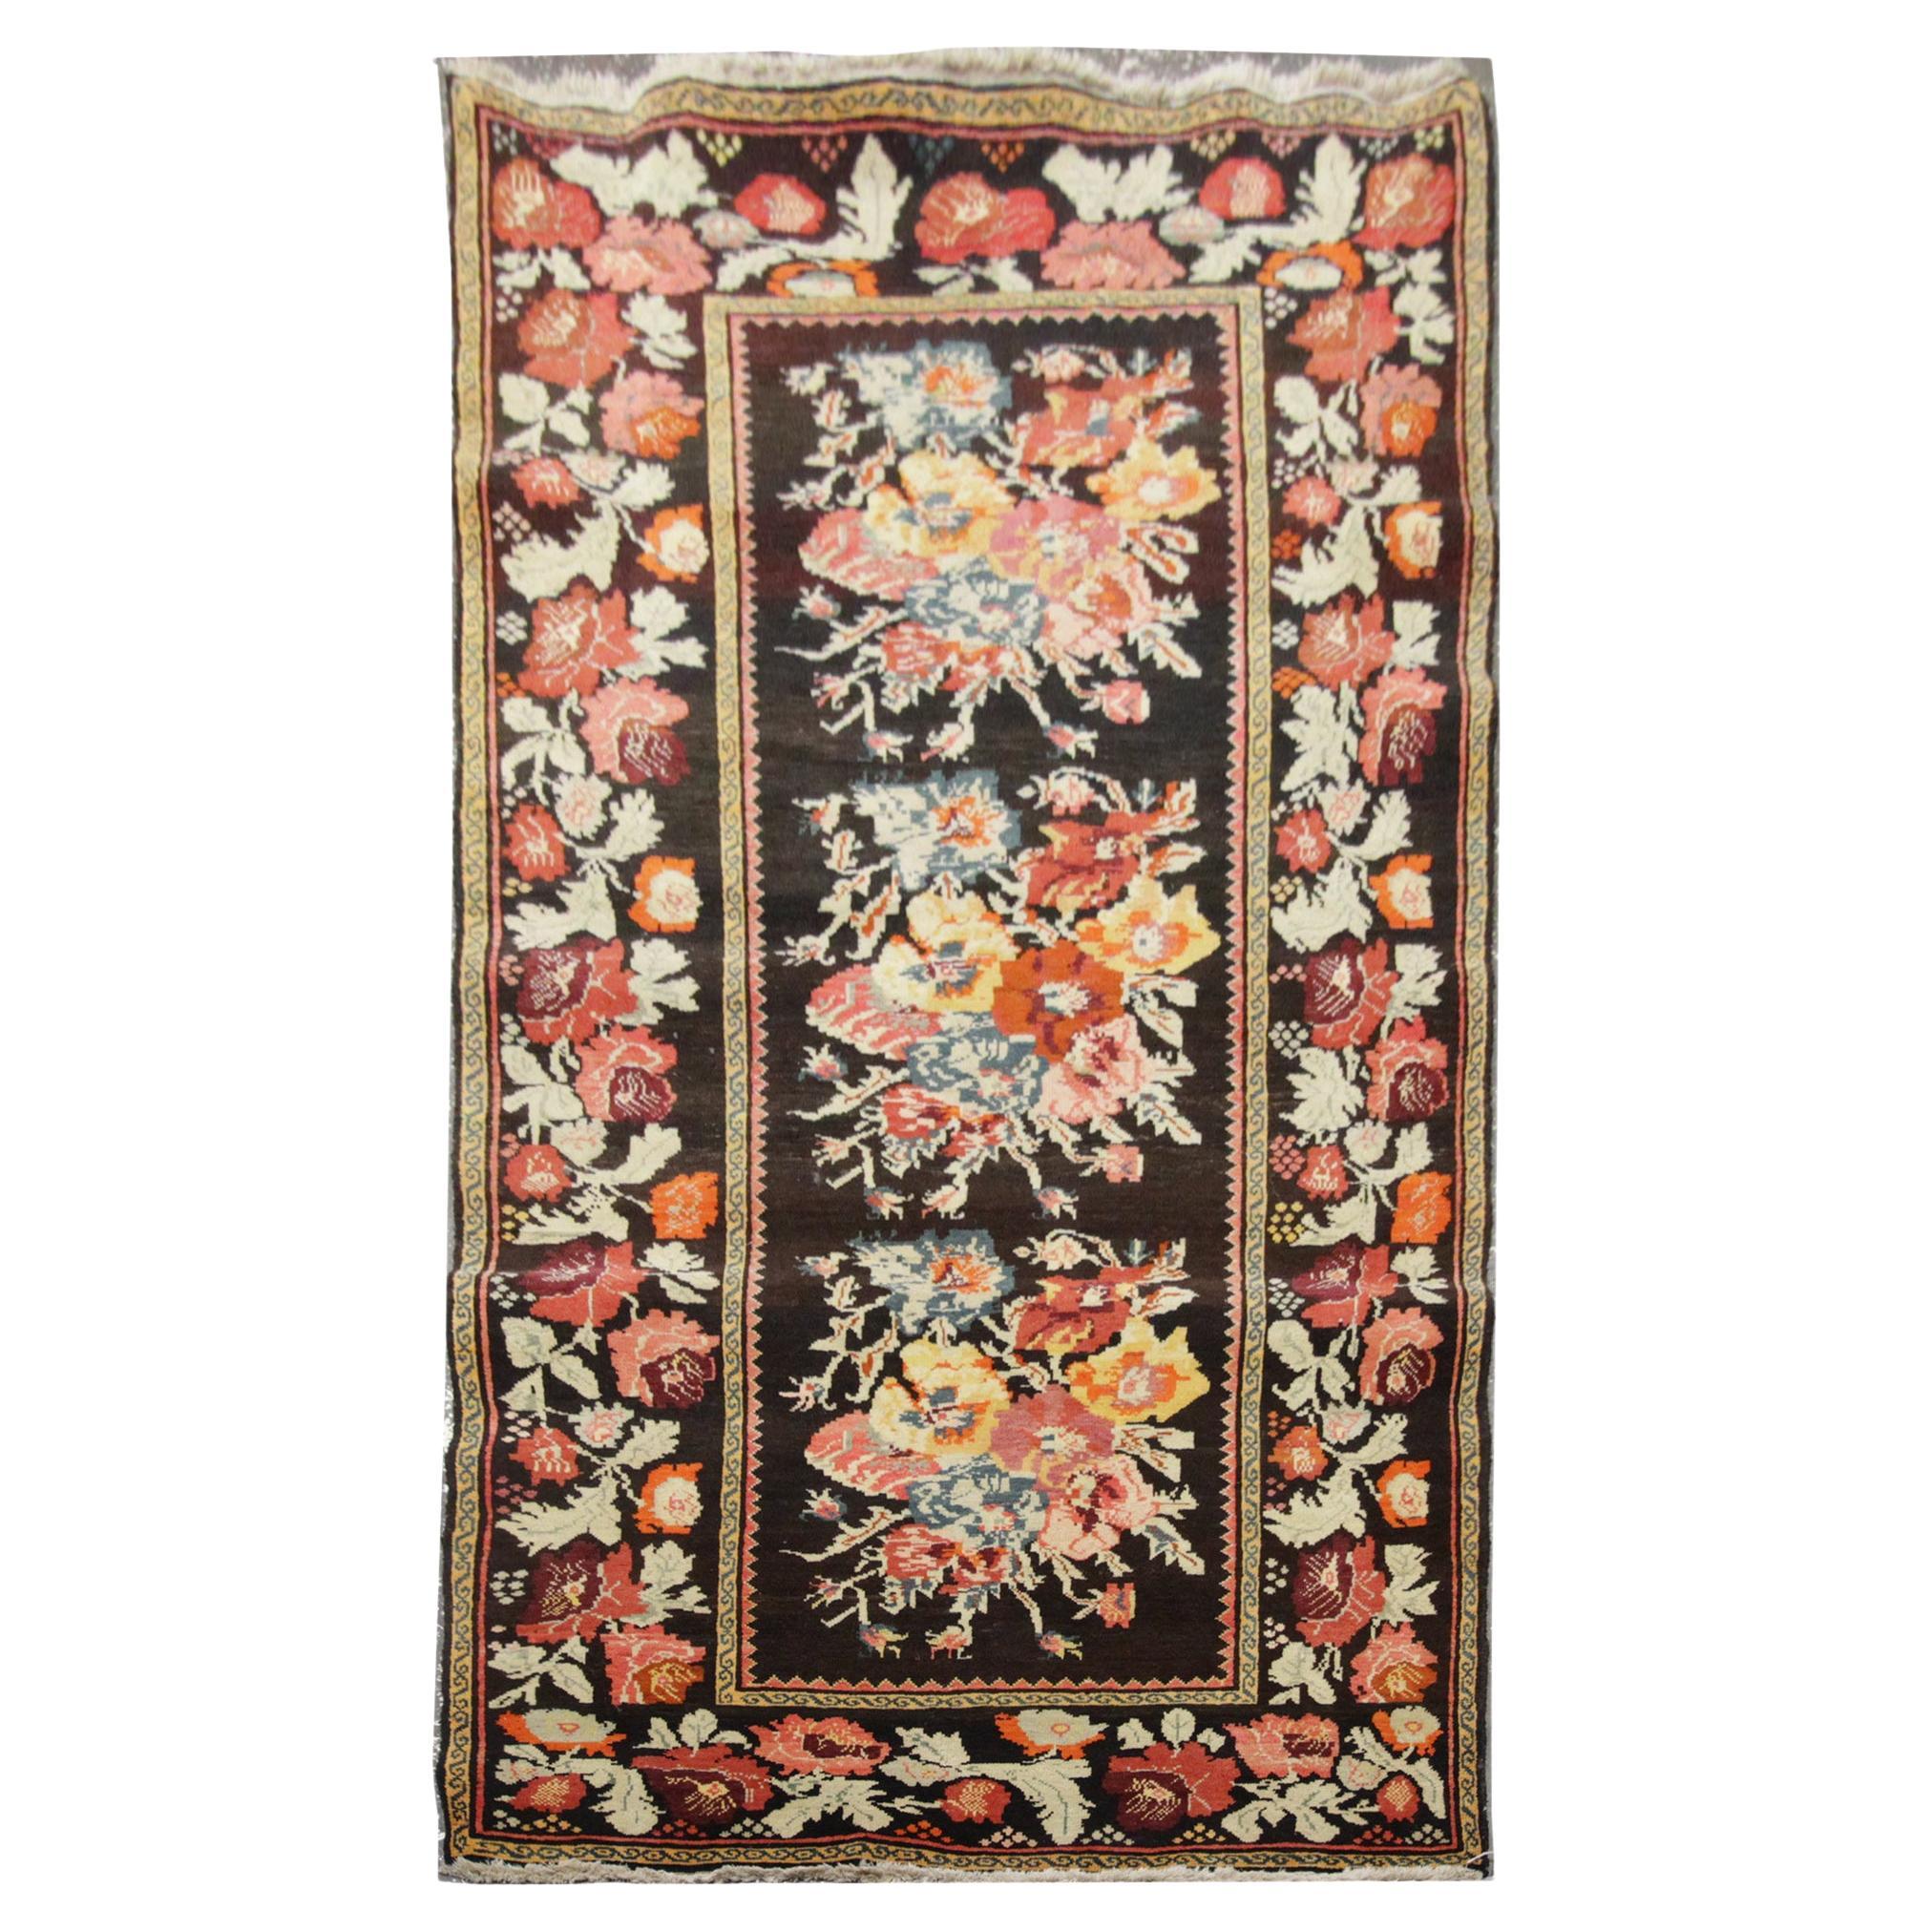 Antique Caucasian Karabagh Handmade Carpet Oriental Rug, Floral Area Rugs CHR64